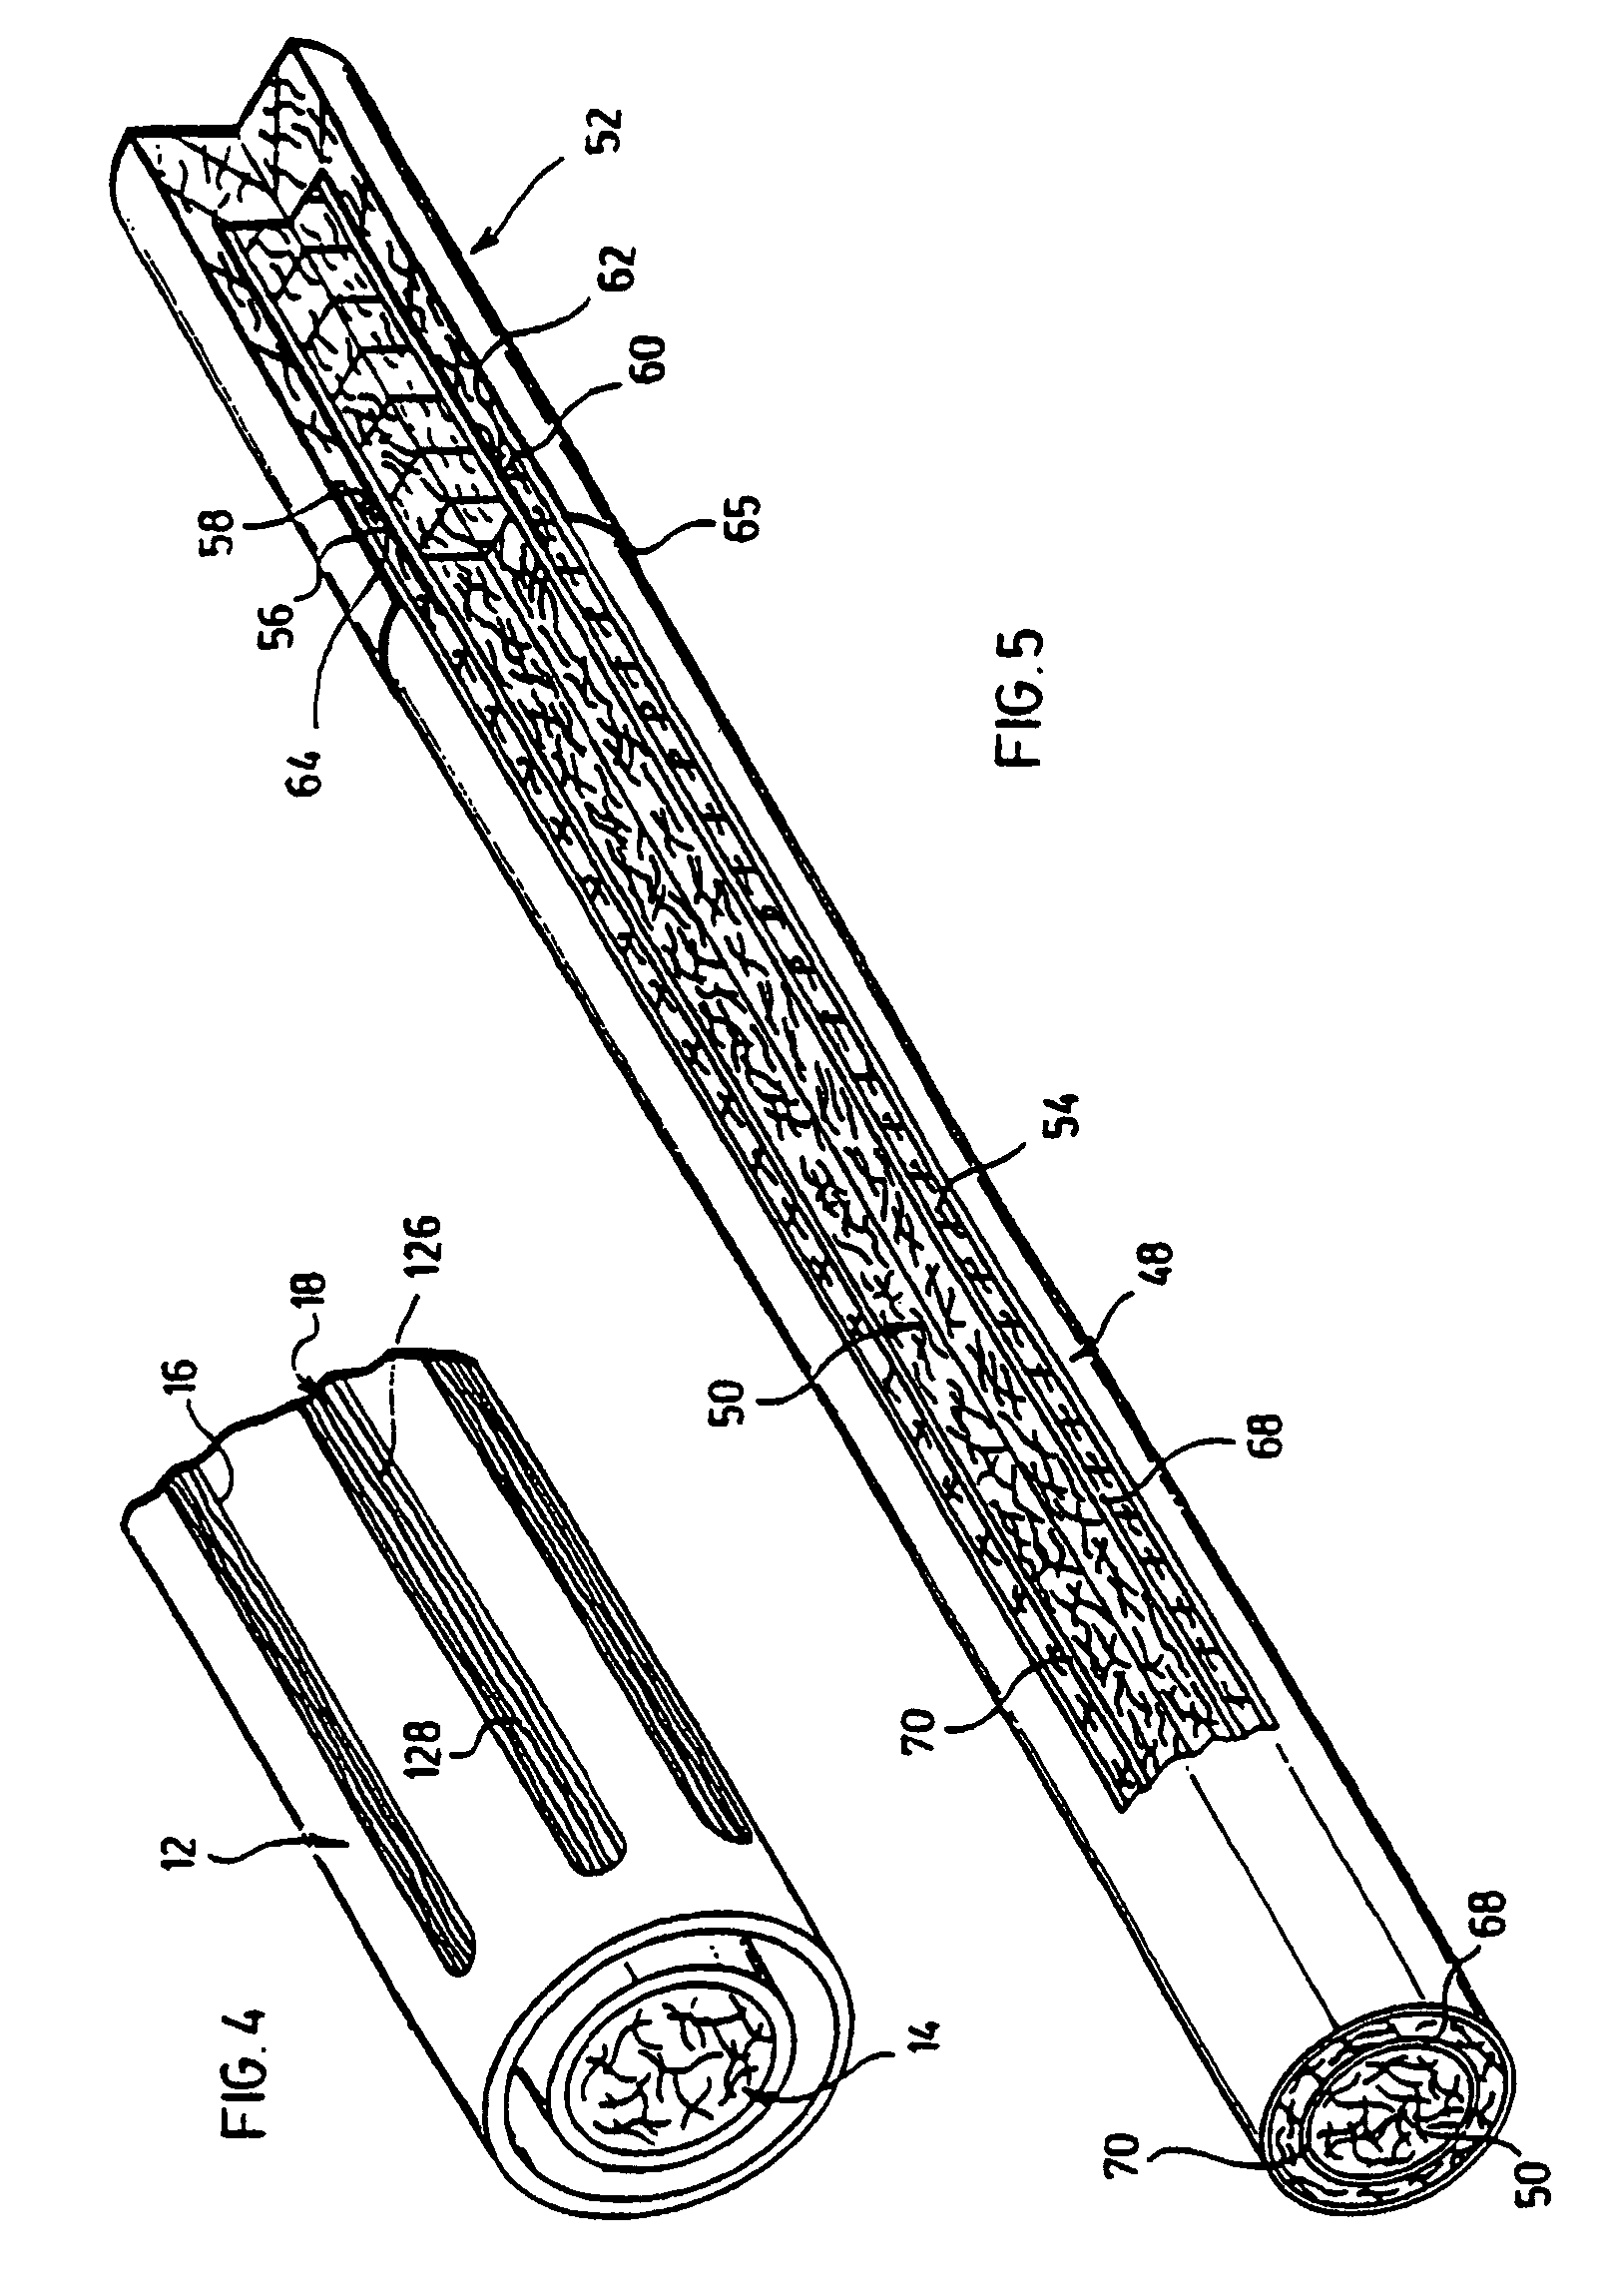 Tubular cigarette device comprising cerium oxide